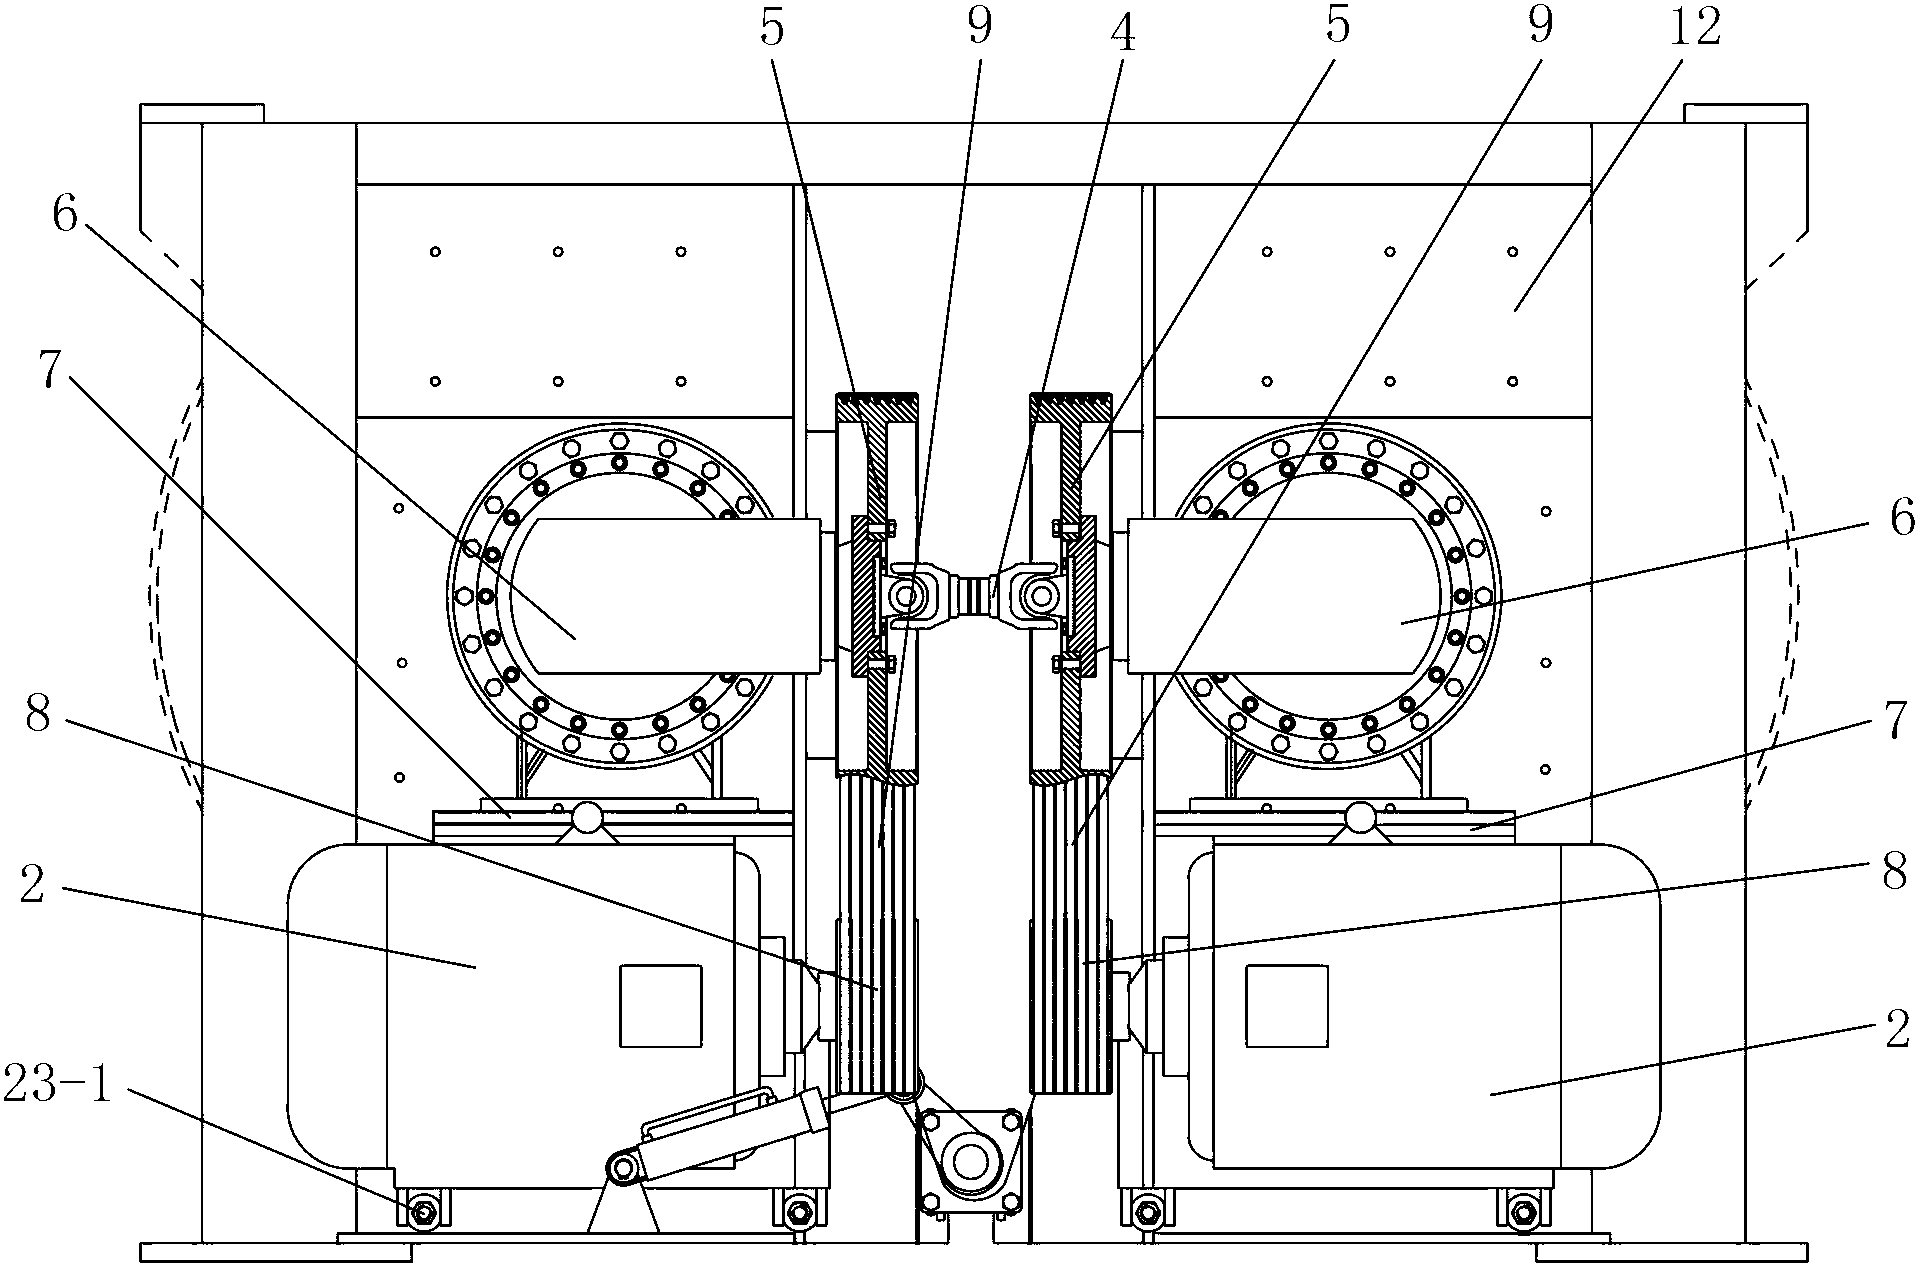 Double-end double-drive double-horizontal-shaft mixer